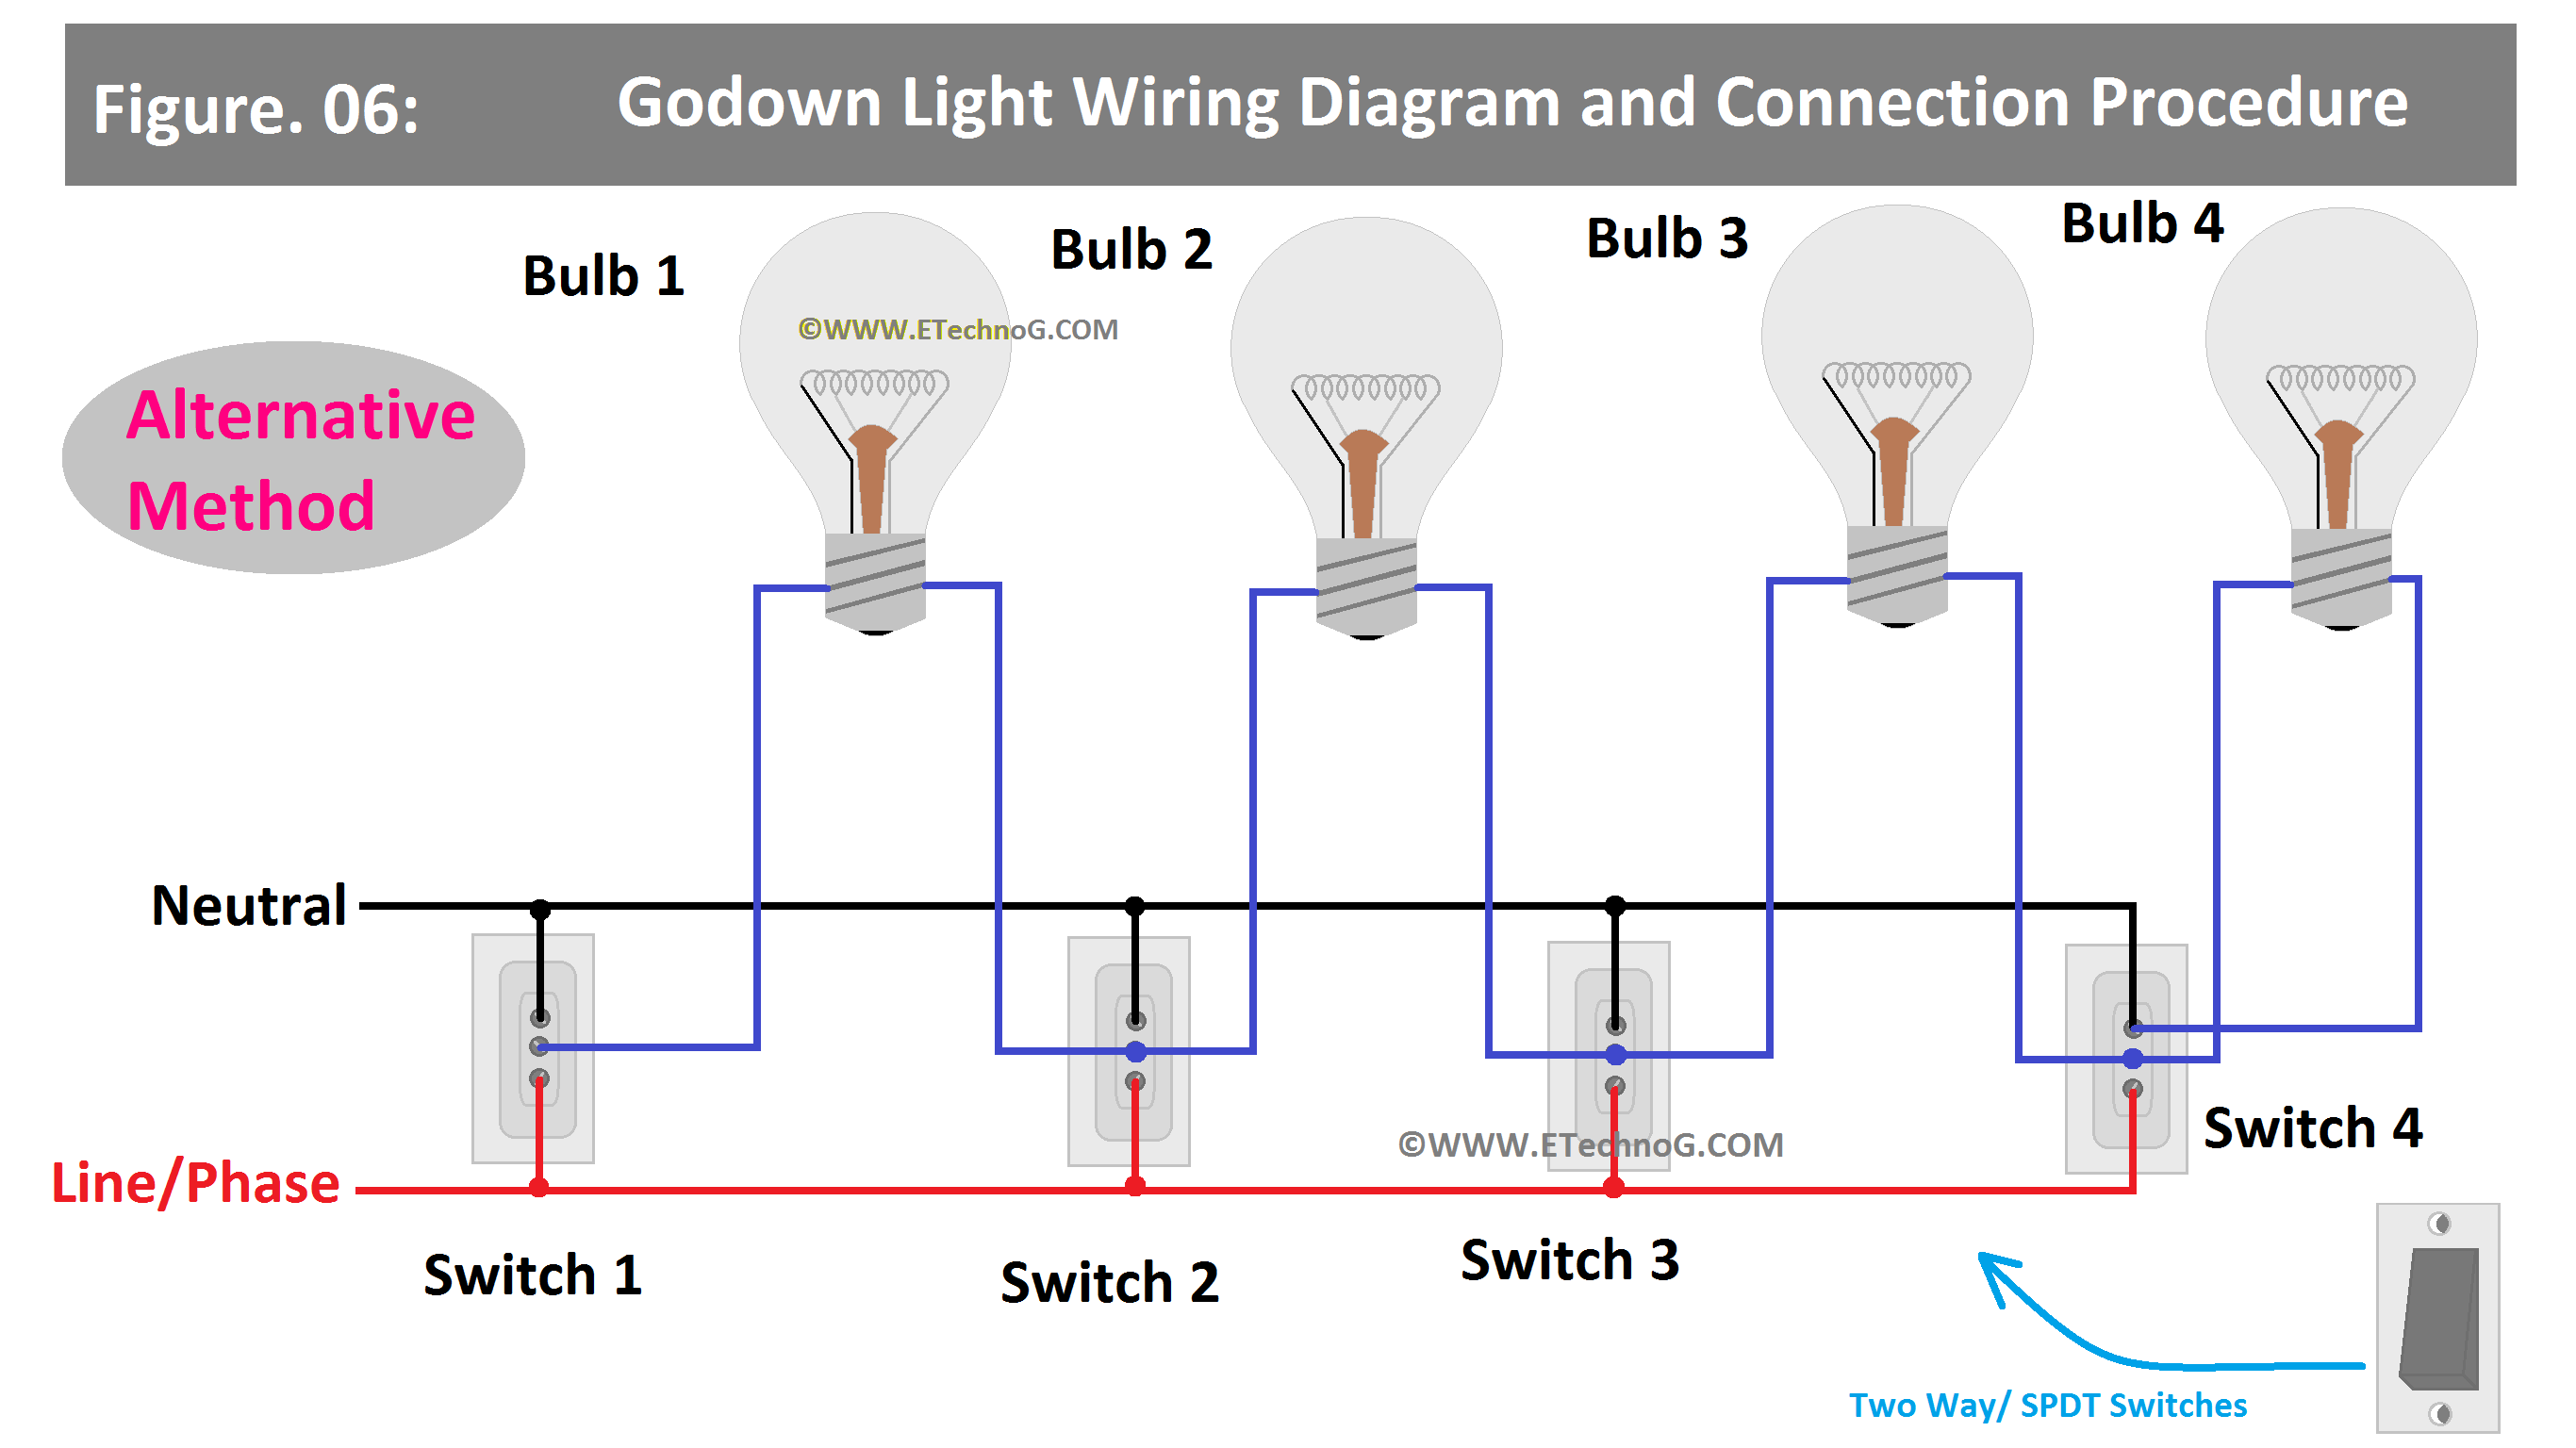 Godown Light Wiring Diagram and Connection Procedure(alternative method)